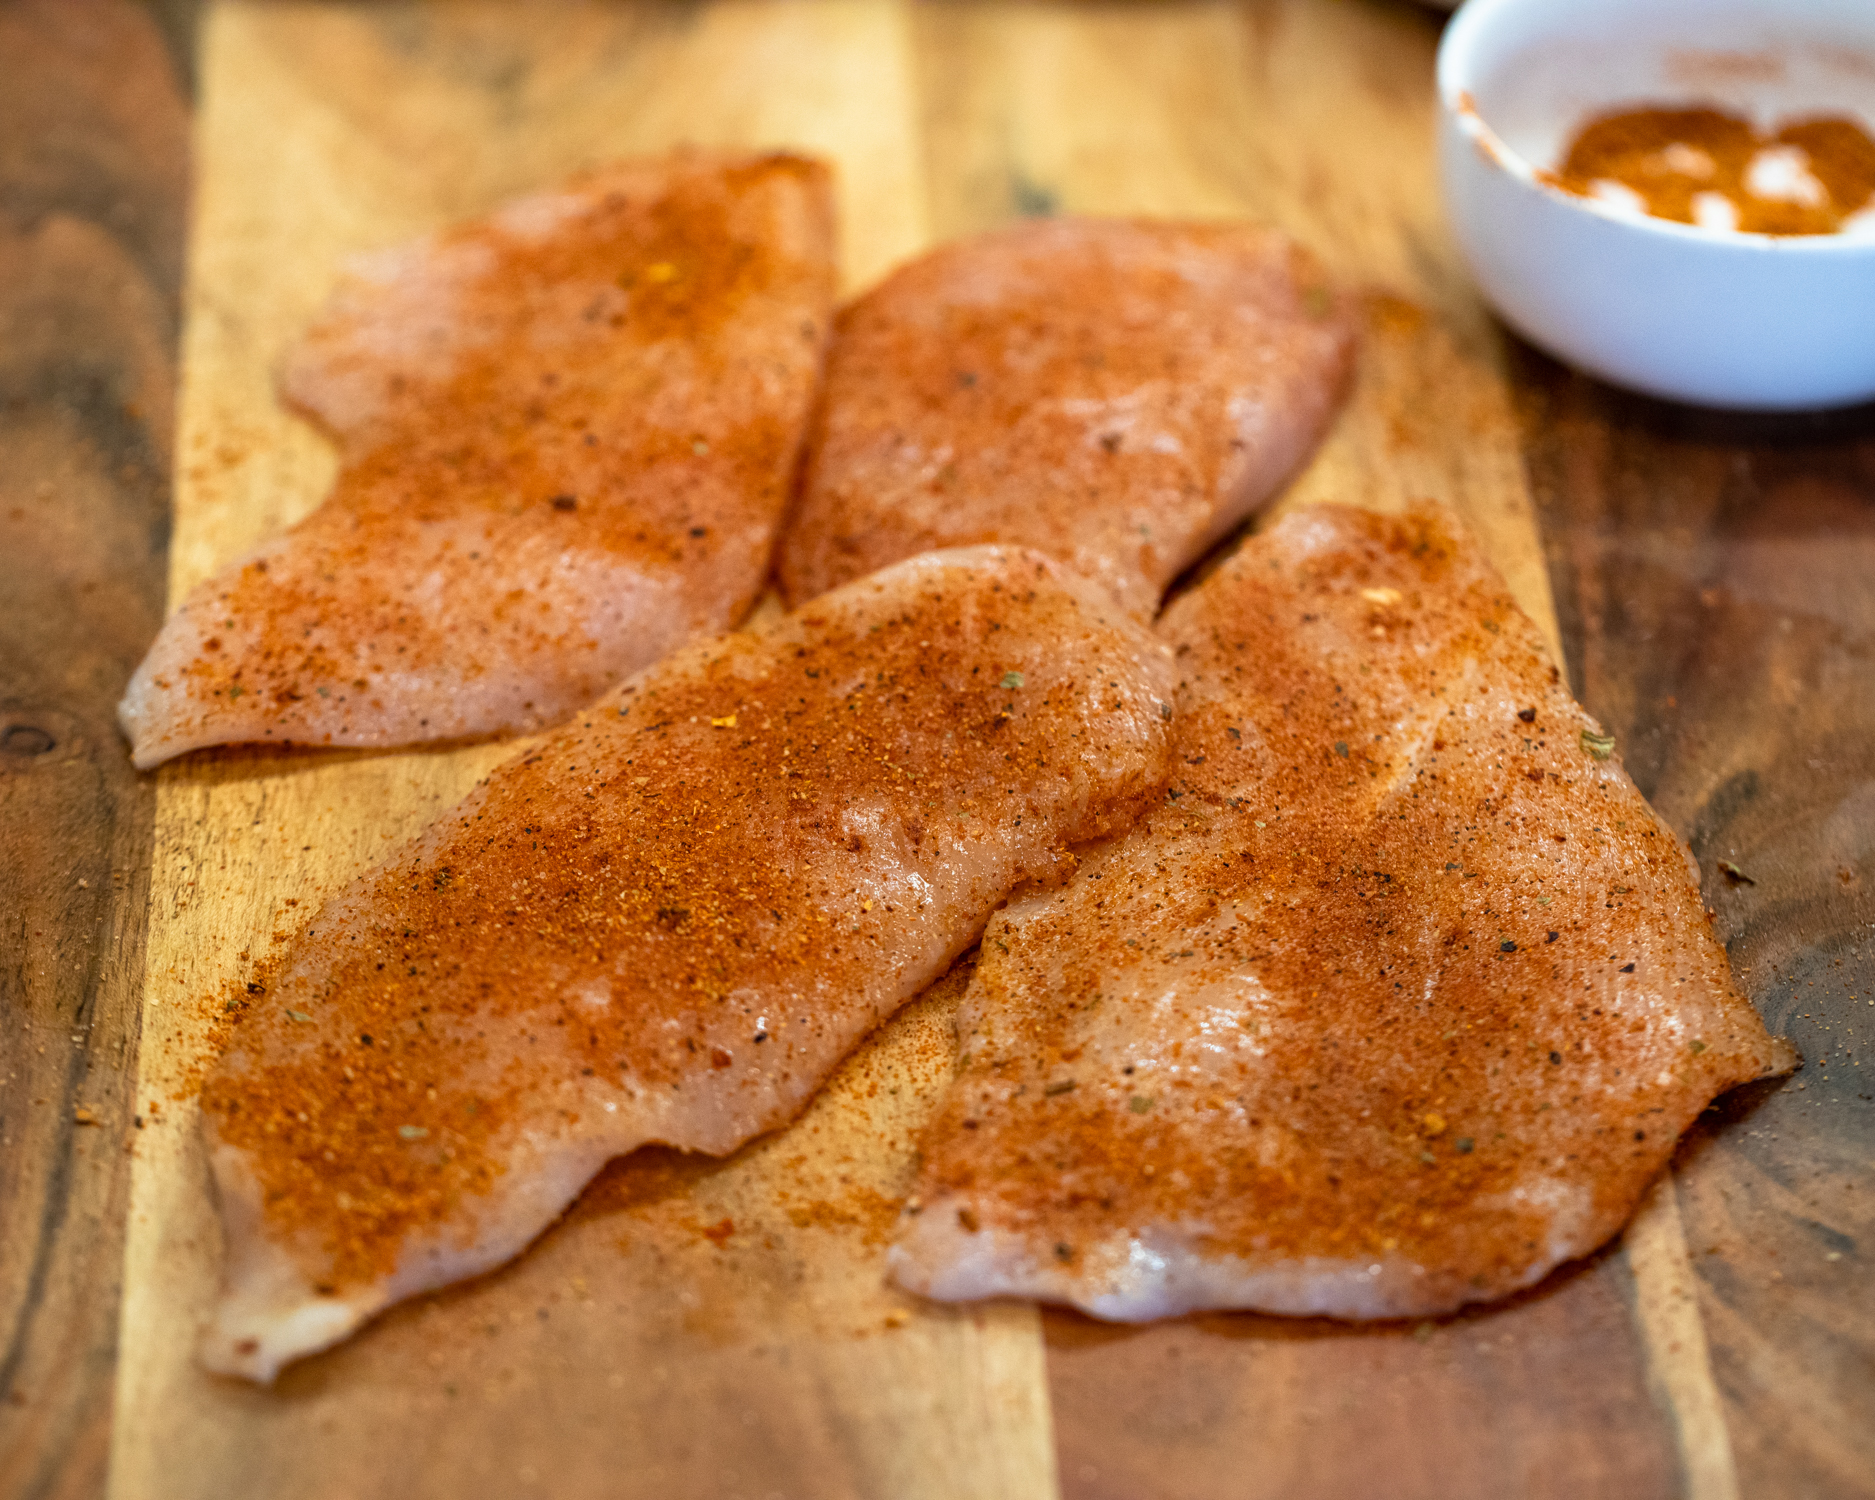 Raw seasoned chicken breast.